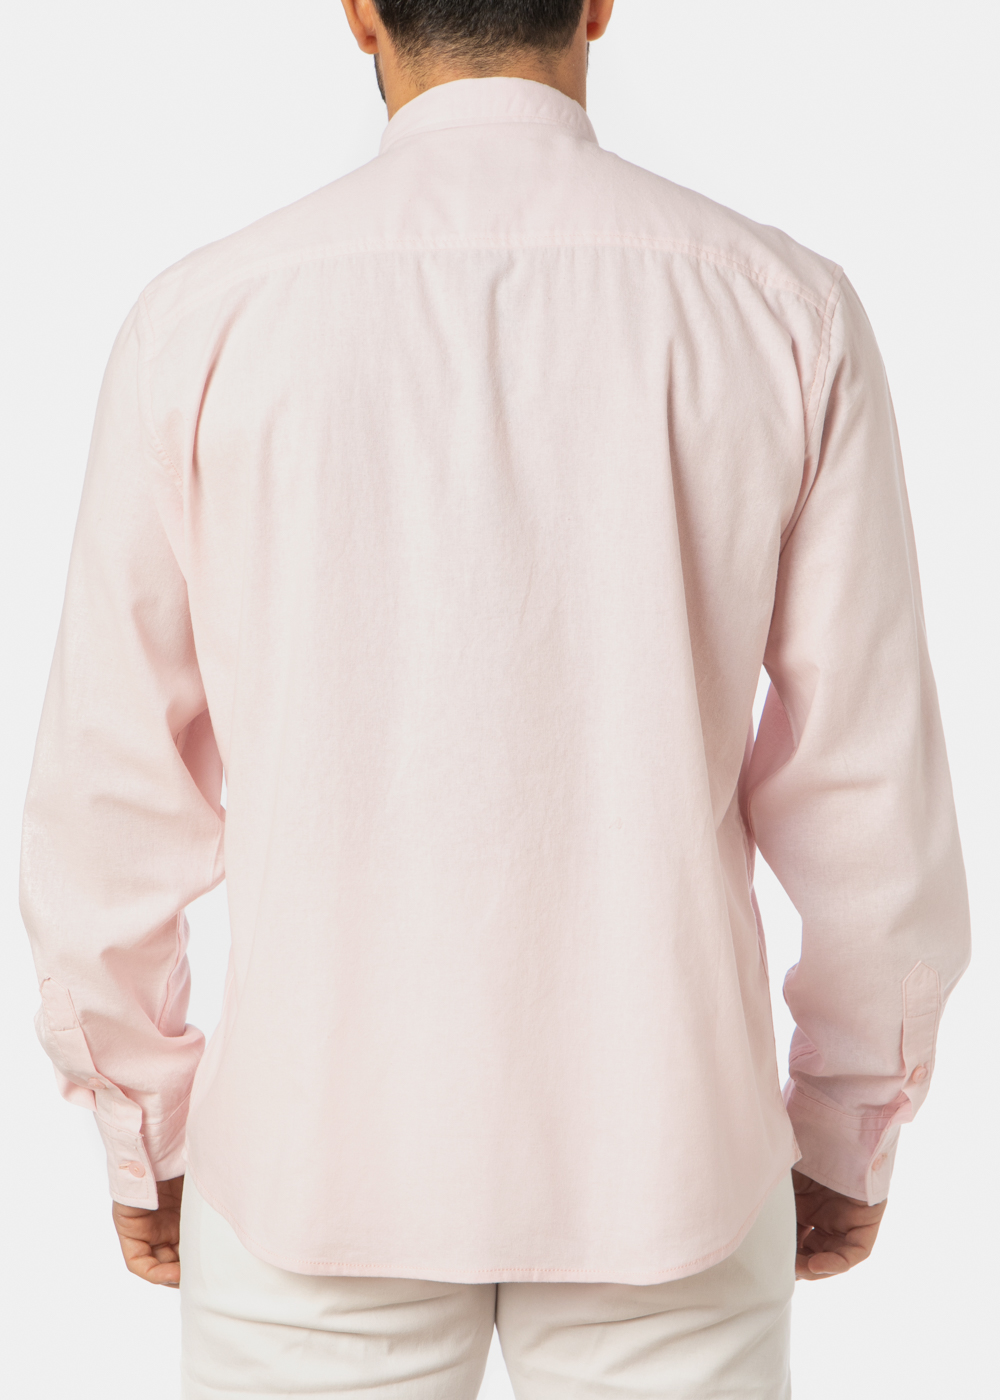 Light Pink Classic Shirt